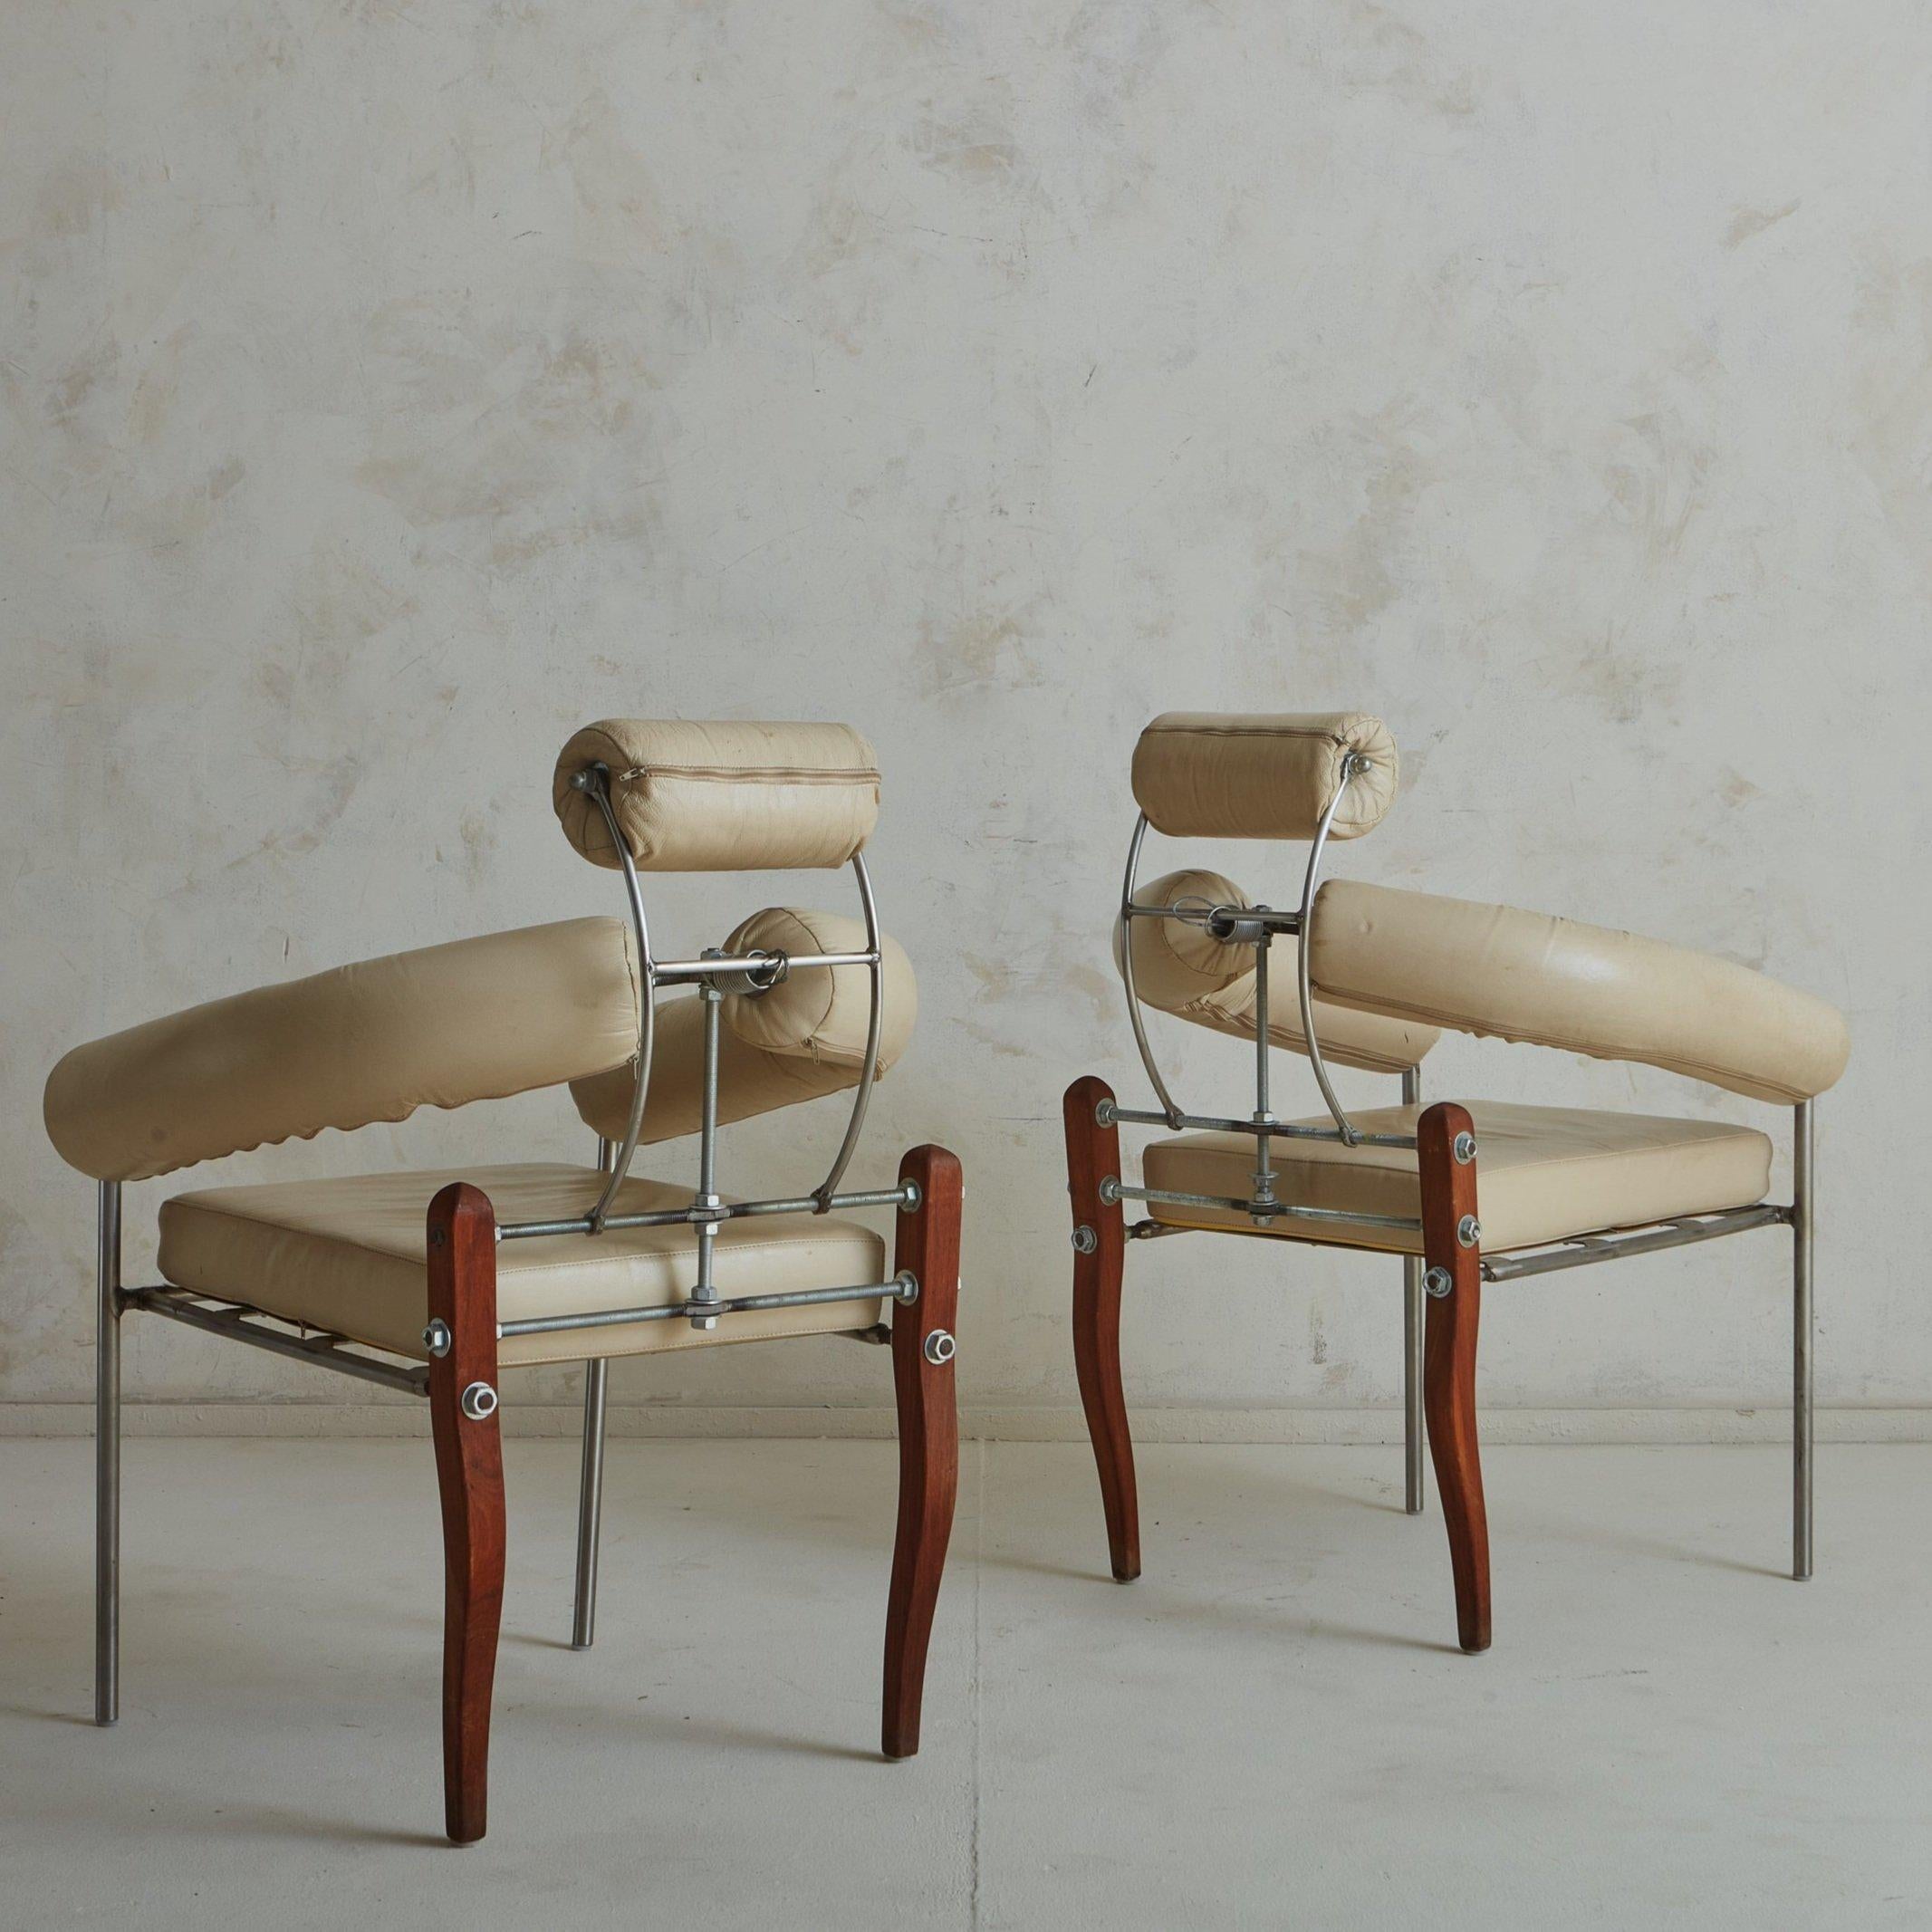 Post-Modern Pair of ‘Pirmin’ Chairs in Cream Leather by Heinz Julen, Switzerland 1990s For Sale